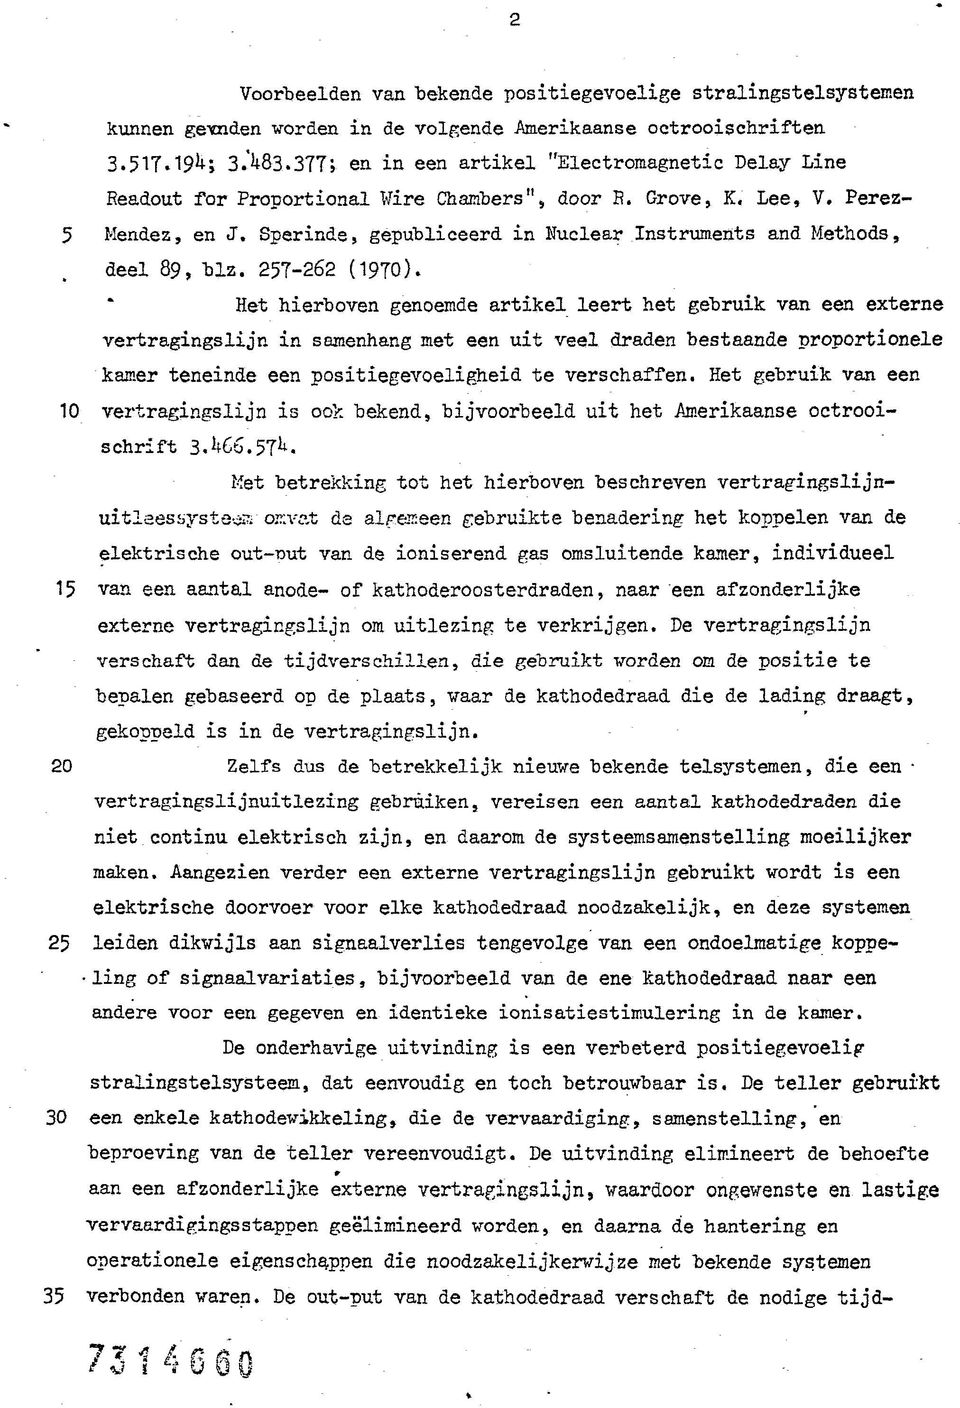 Spernds, gepublceerd n Nuclear Instruments and Methods, deel 89, bz. 257-262 (1970).